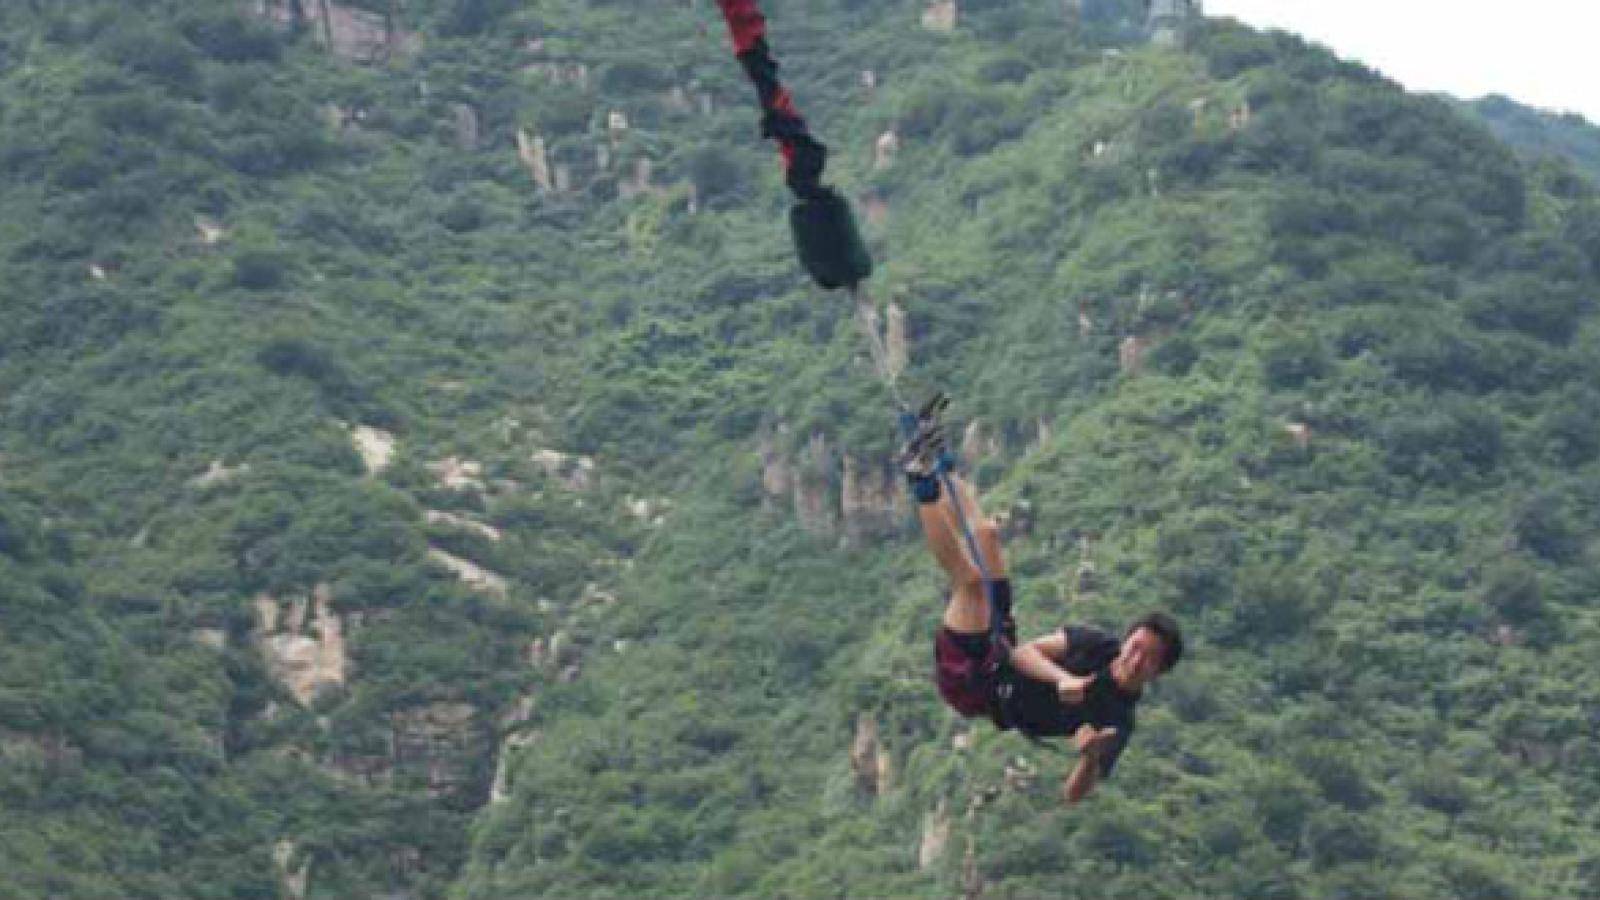 Adam Kong bungee jumping in China.